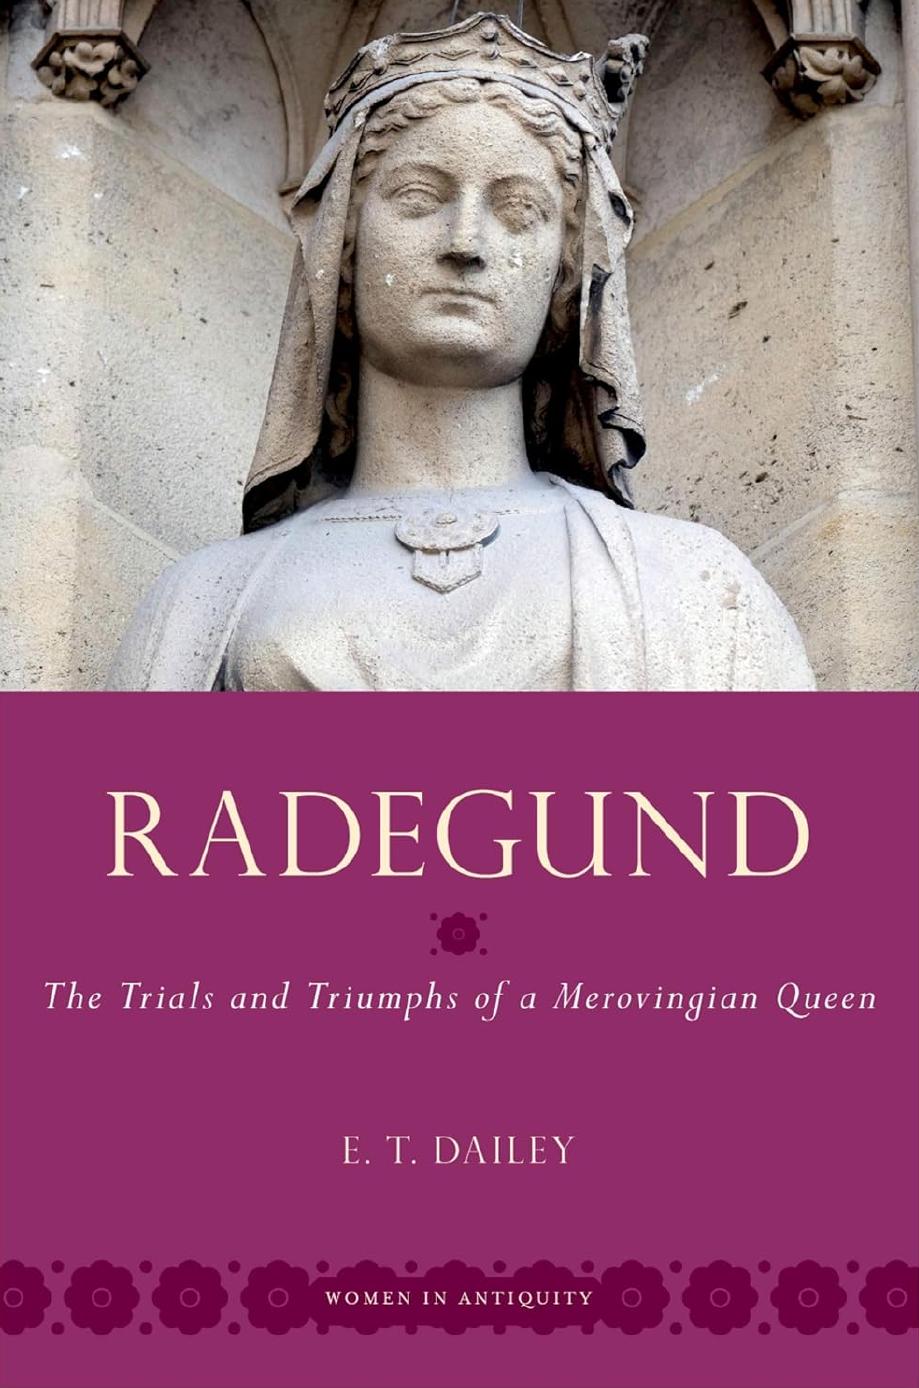 Radegund: The Trials and Triumphs of a Merovingian Queen